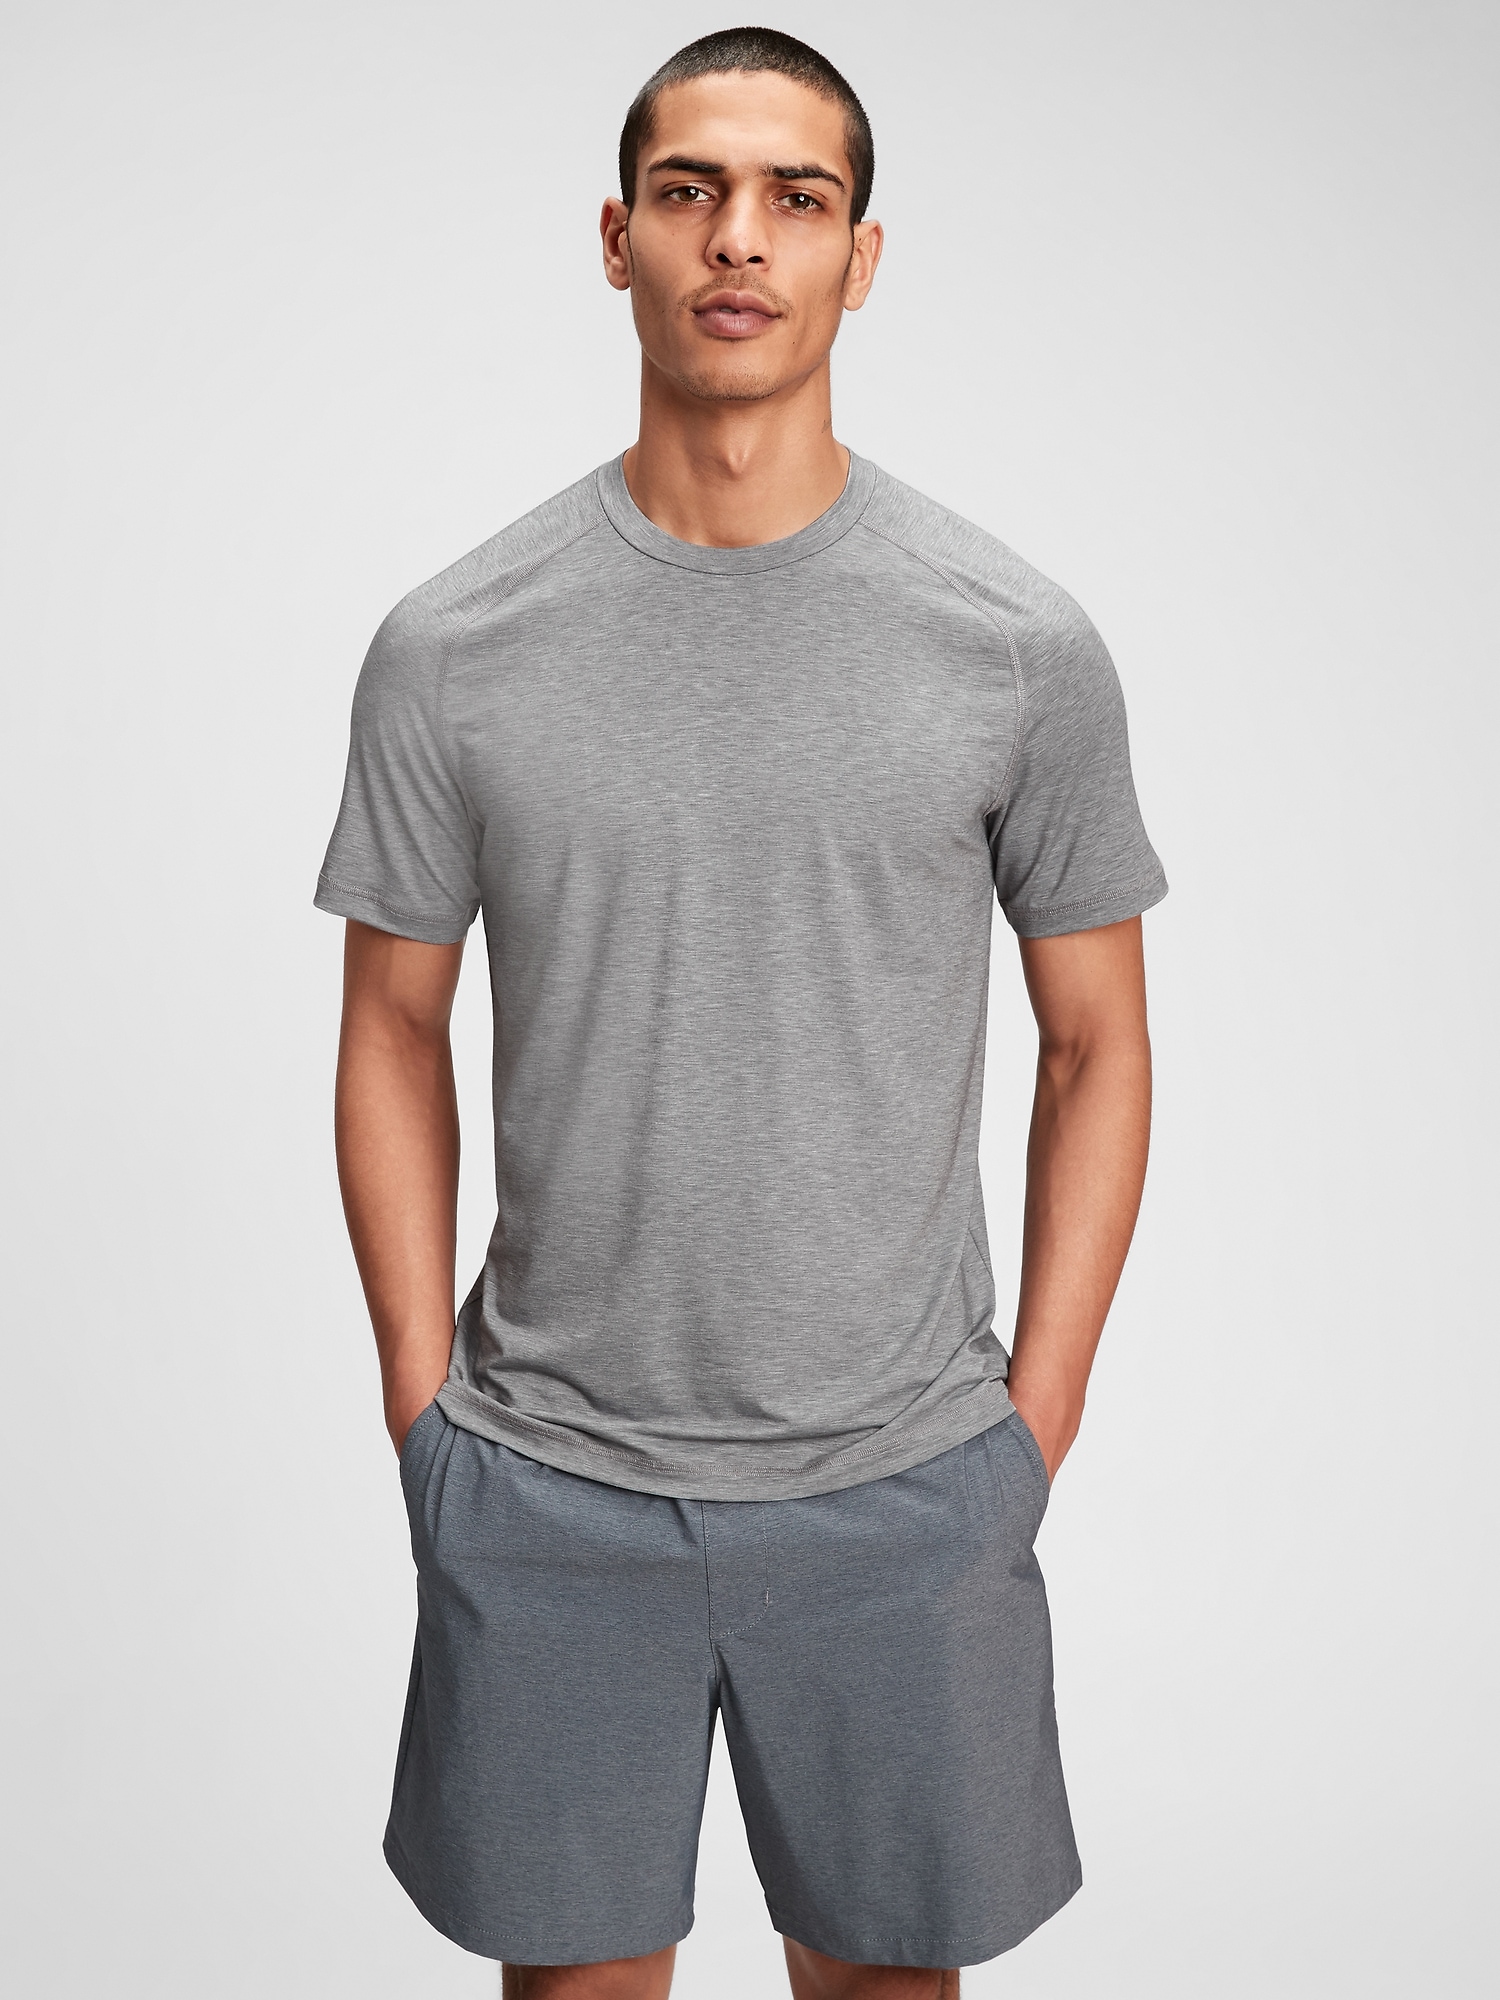 Gap Fit Active T-Shirt gray. 1